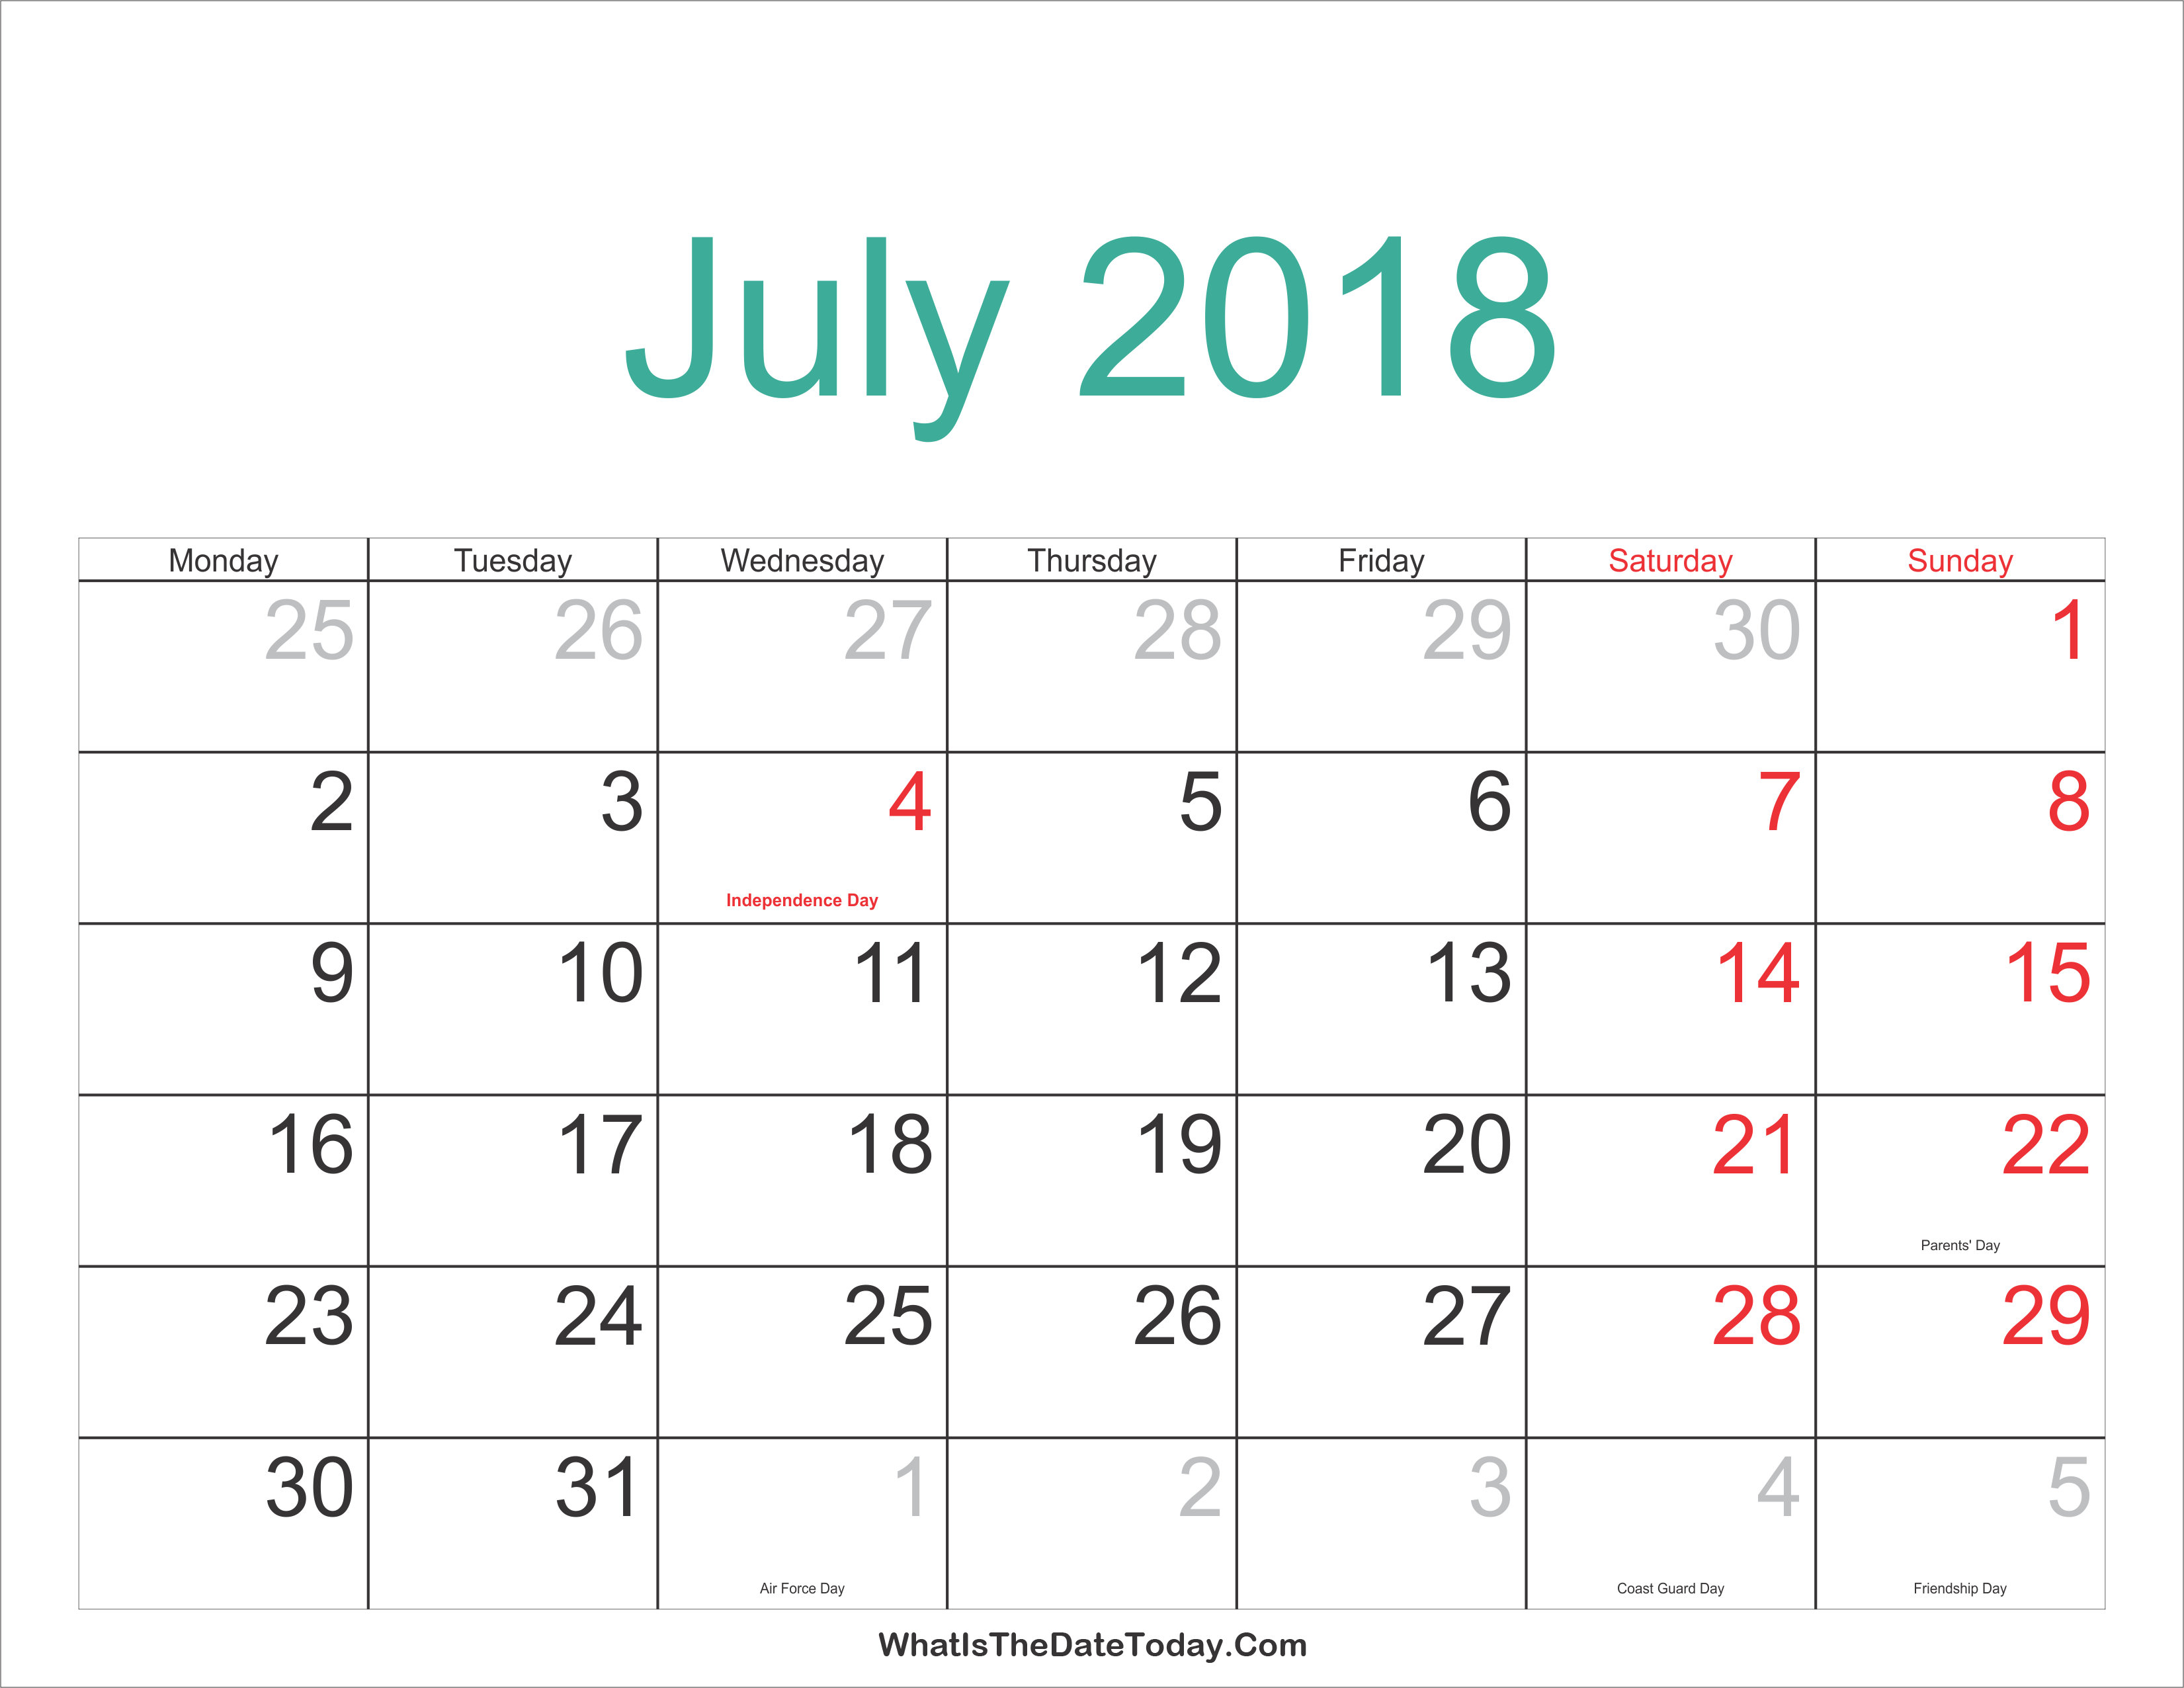 july-2018-calendar-printable-with-holidays-whatisthedatetoday-com